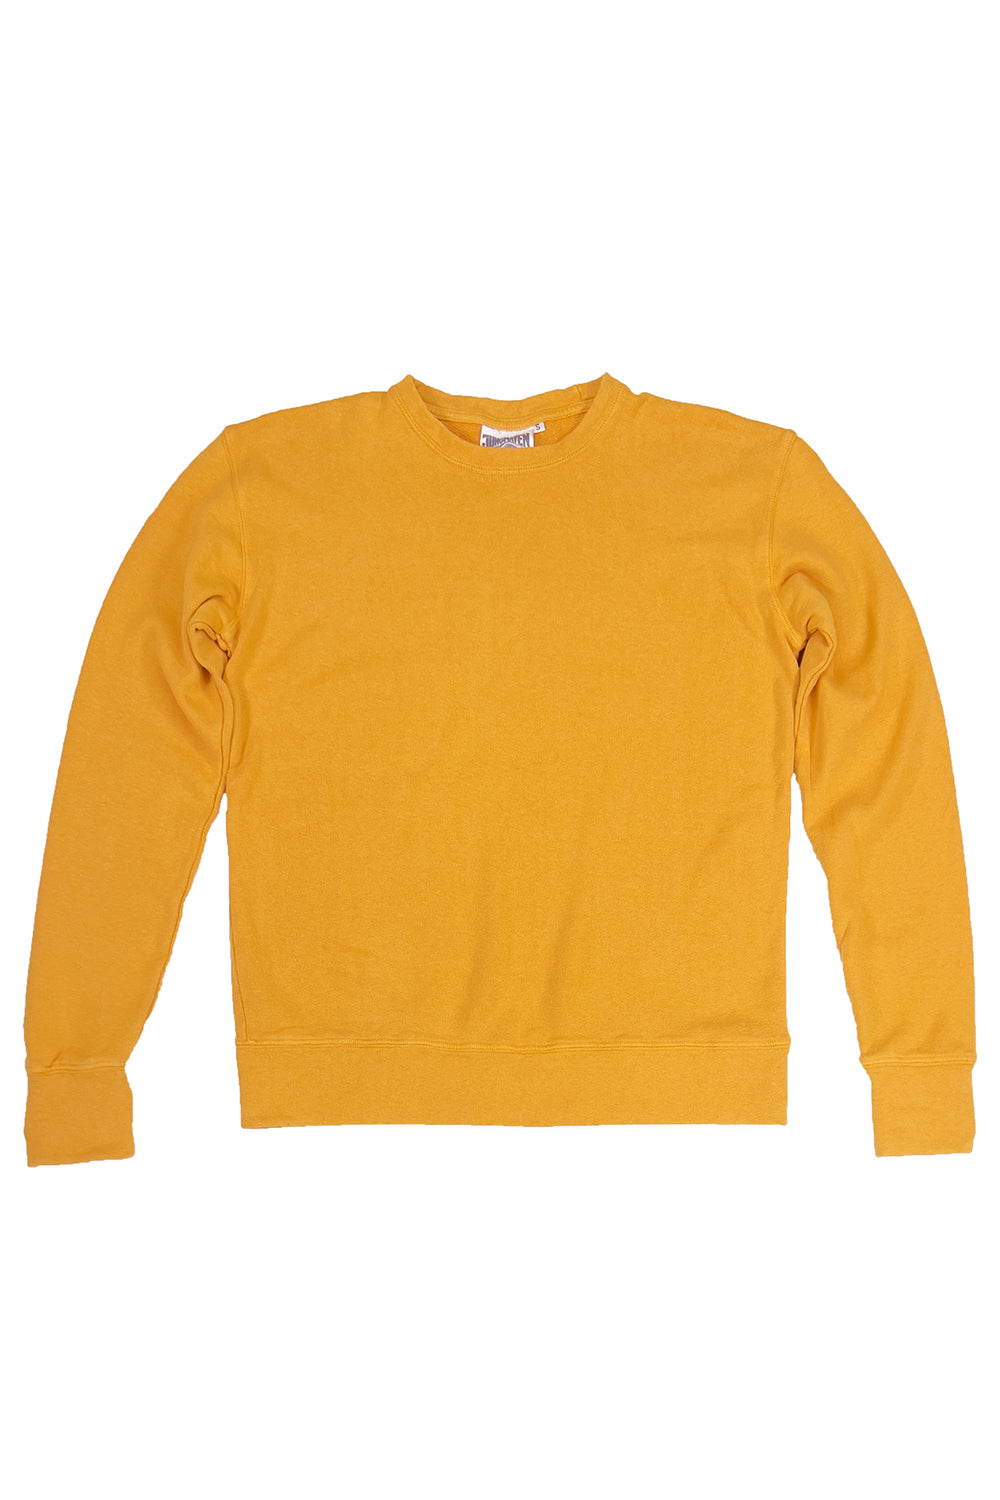 Tahoe Sweatshirt - Sale Colors | Jungmaven Hemp Clothing & Accessories / Color: Mango Mojito